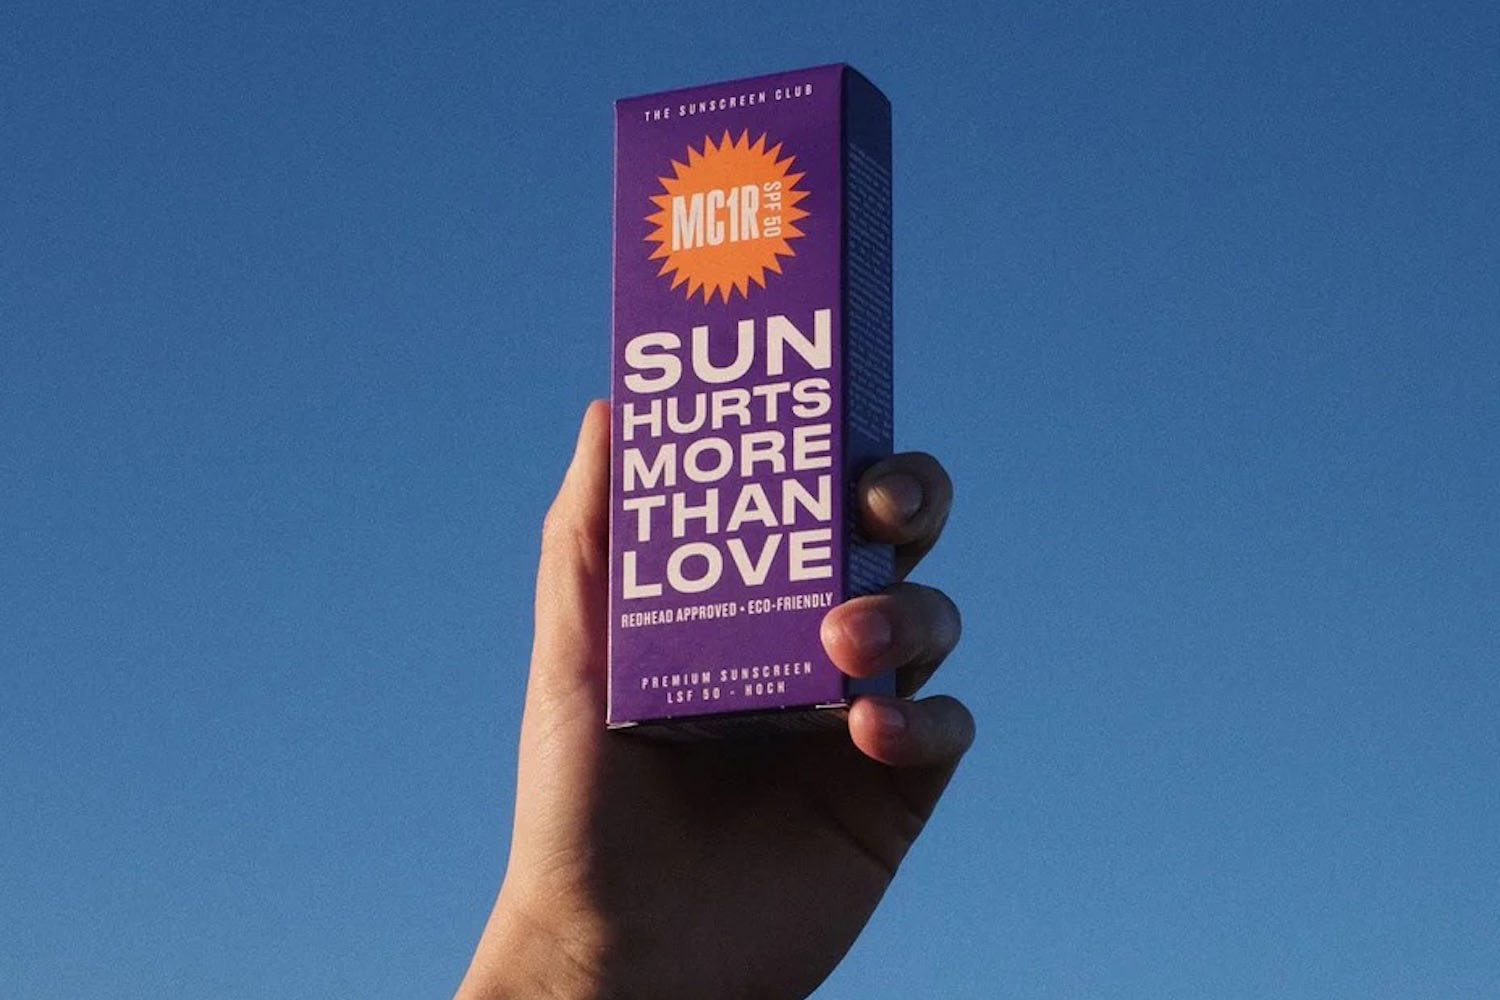 a hand holding a box of MC1R sunscreen against the sky